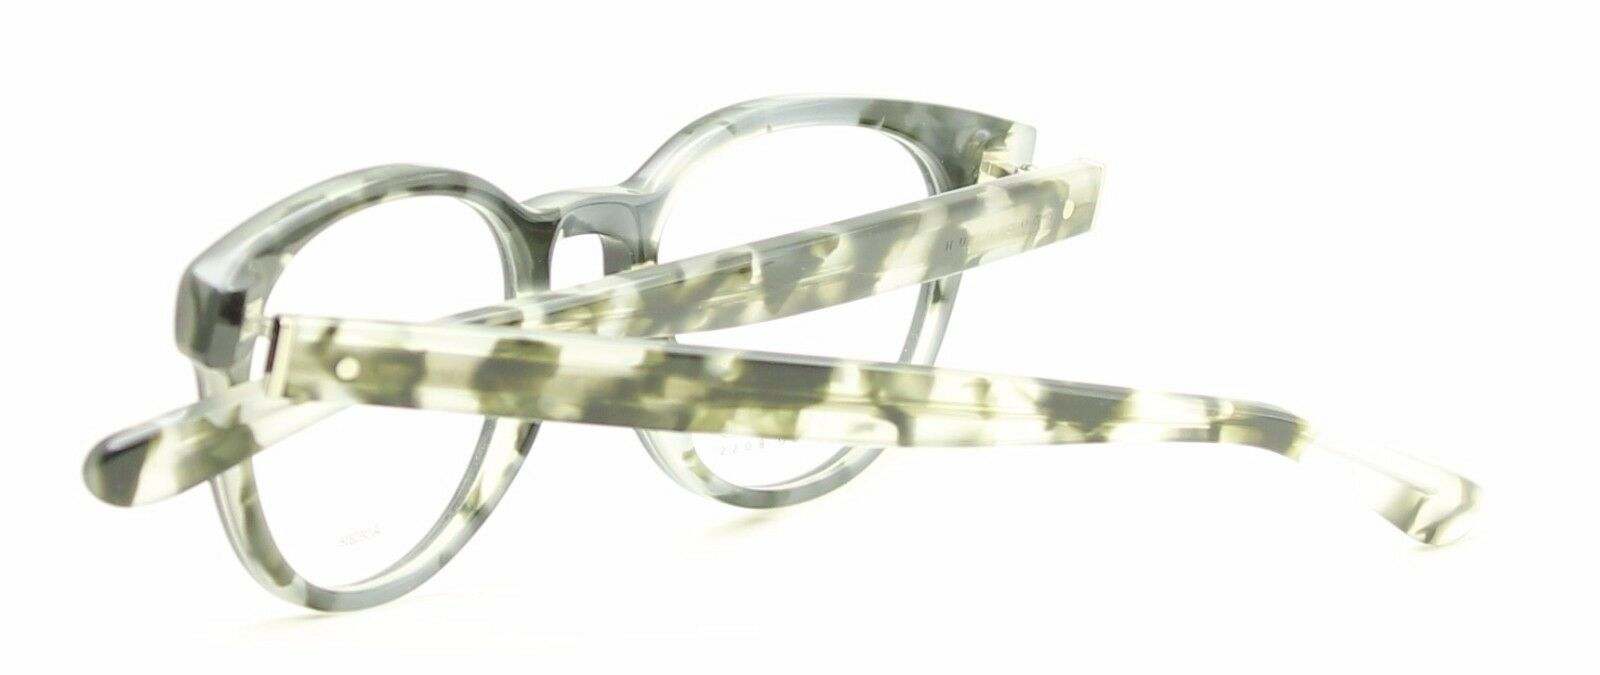 HUGO BOSS 0747 KIL 48mm Eyewear FRAMES Glasses RX Optical Eyeglasses New - Italy